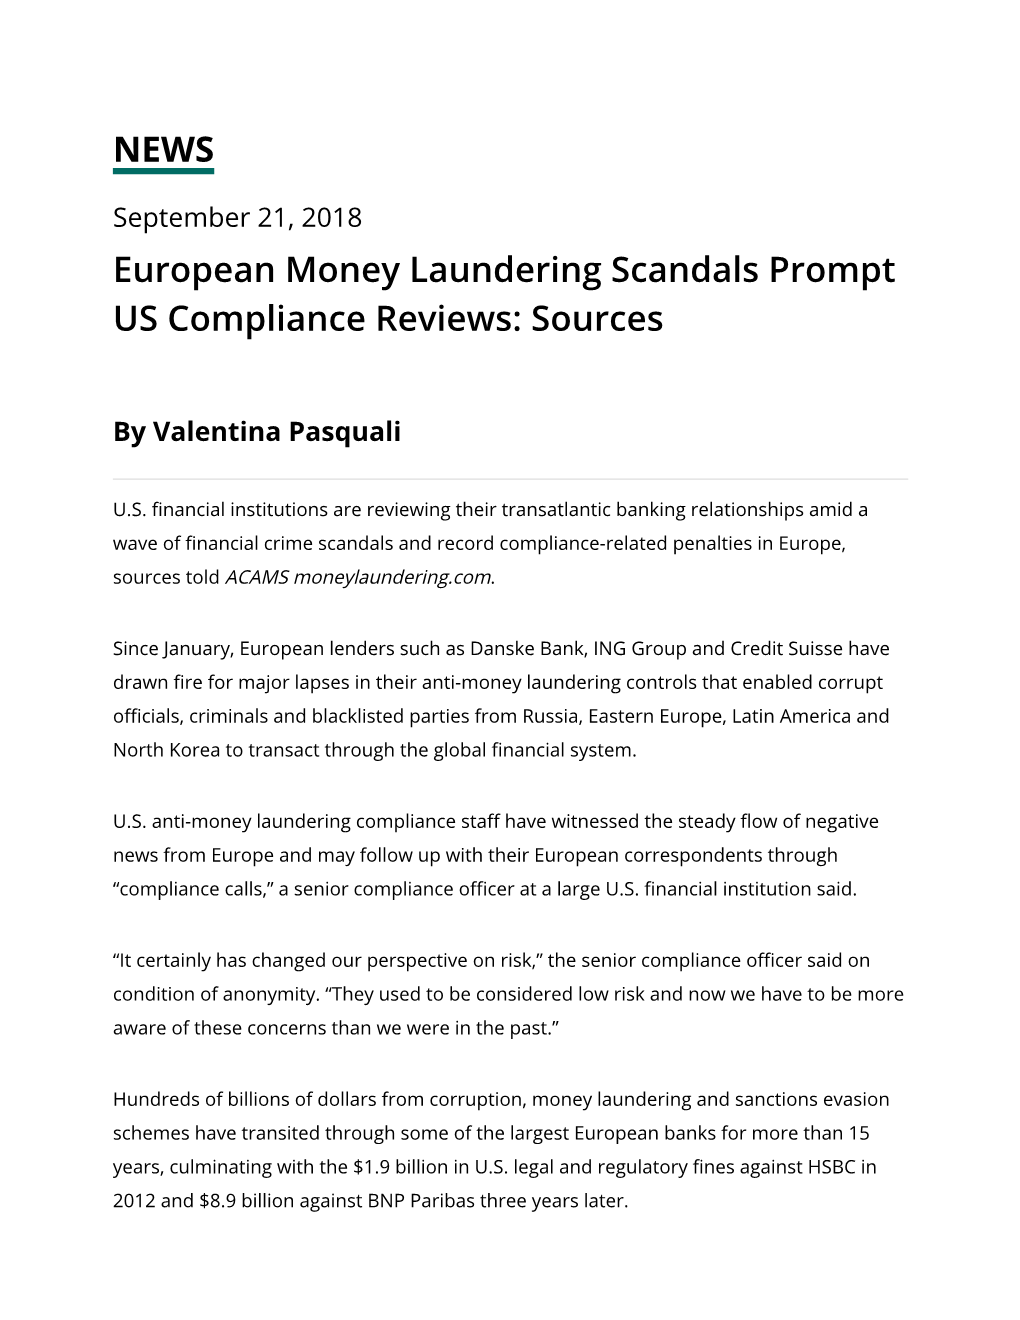 NEWS European Money Laundering Scandals Prompt US Compliance